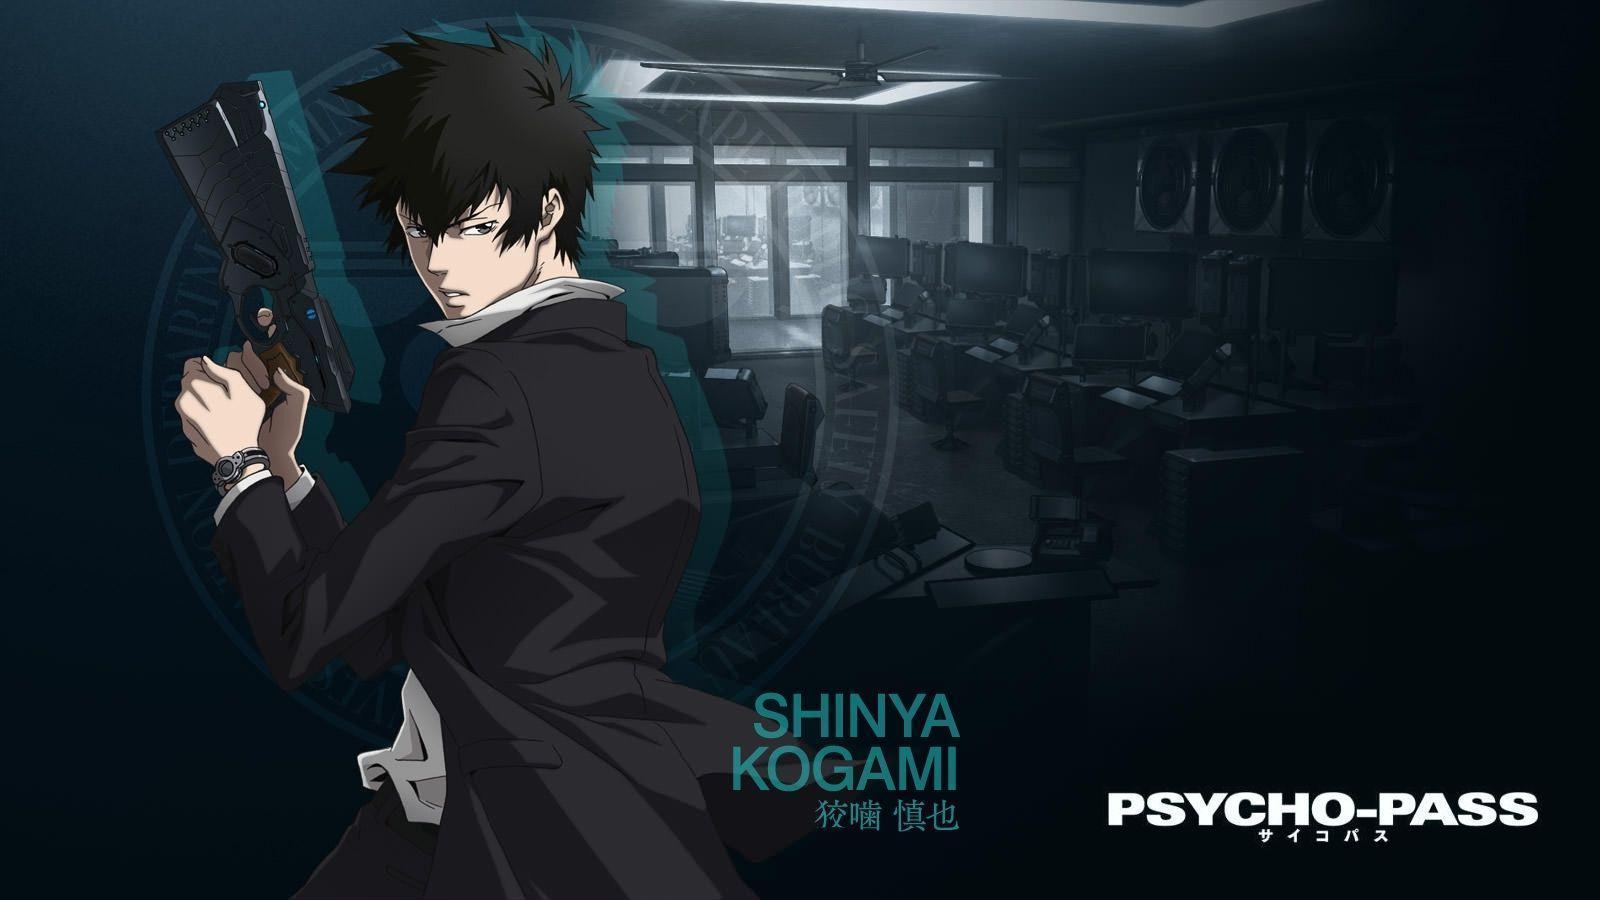 Psycho Pass. Free Anime Wallpaper Site